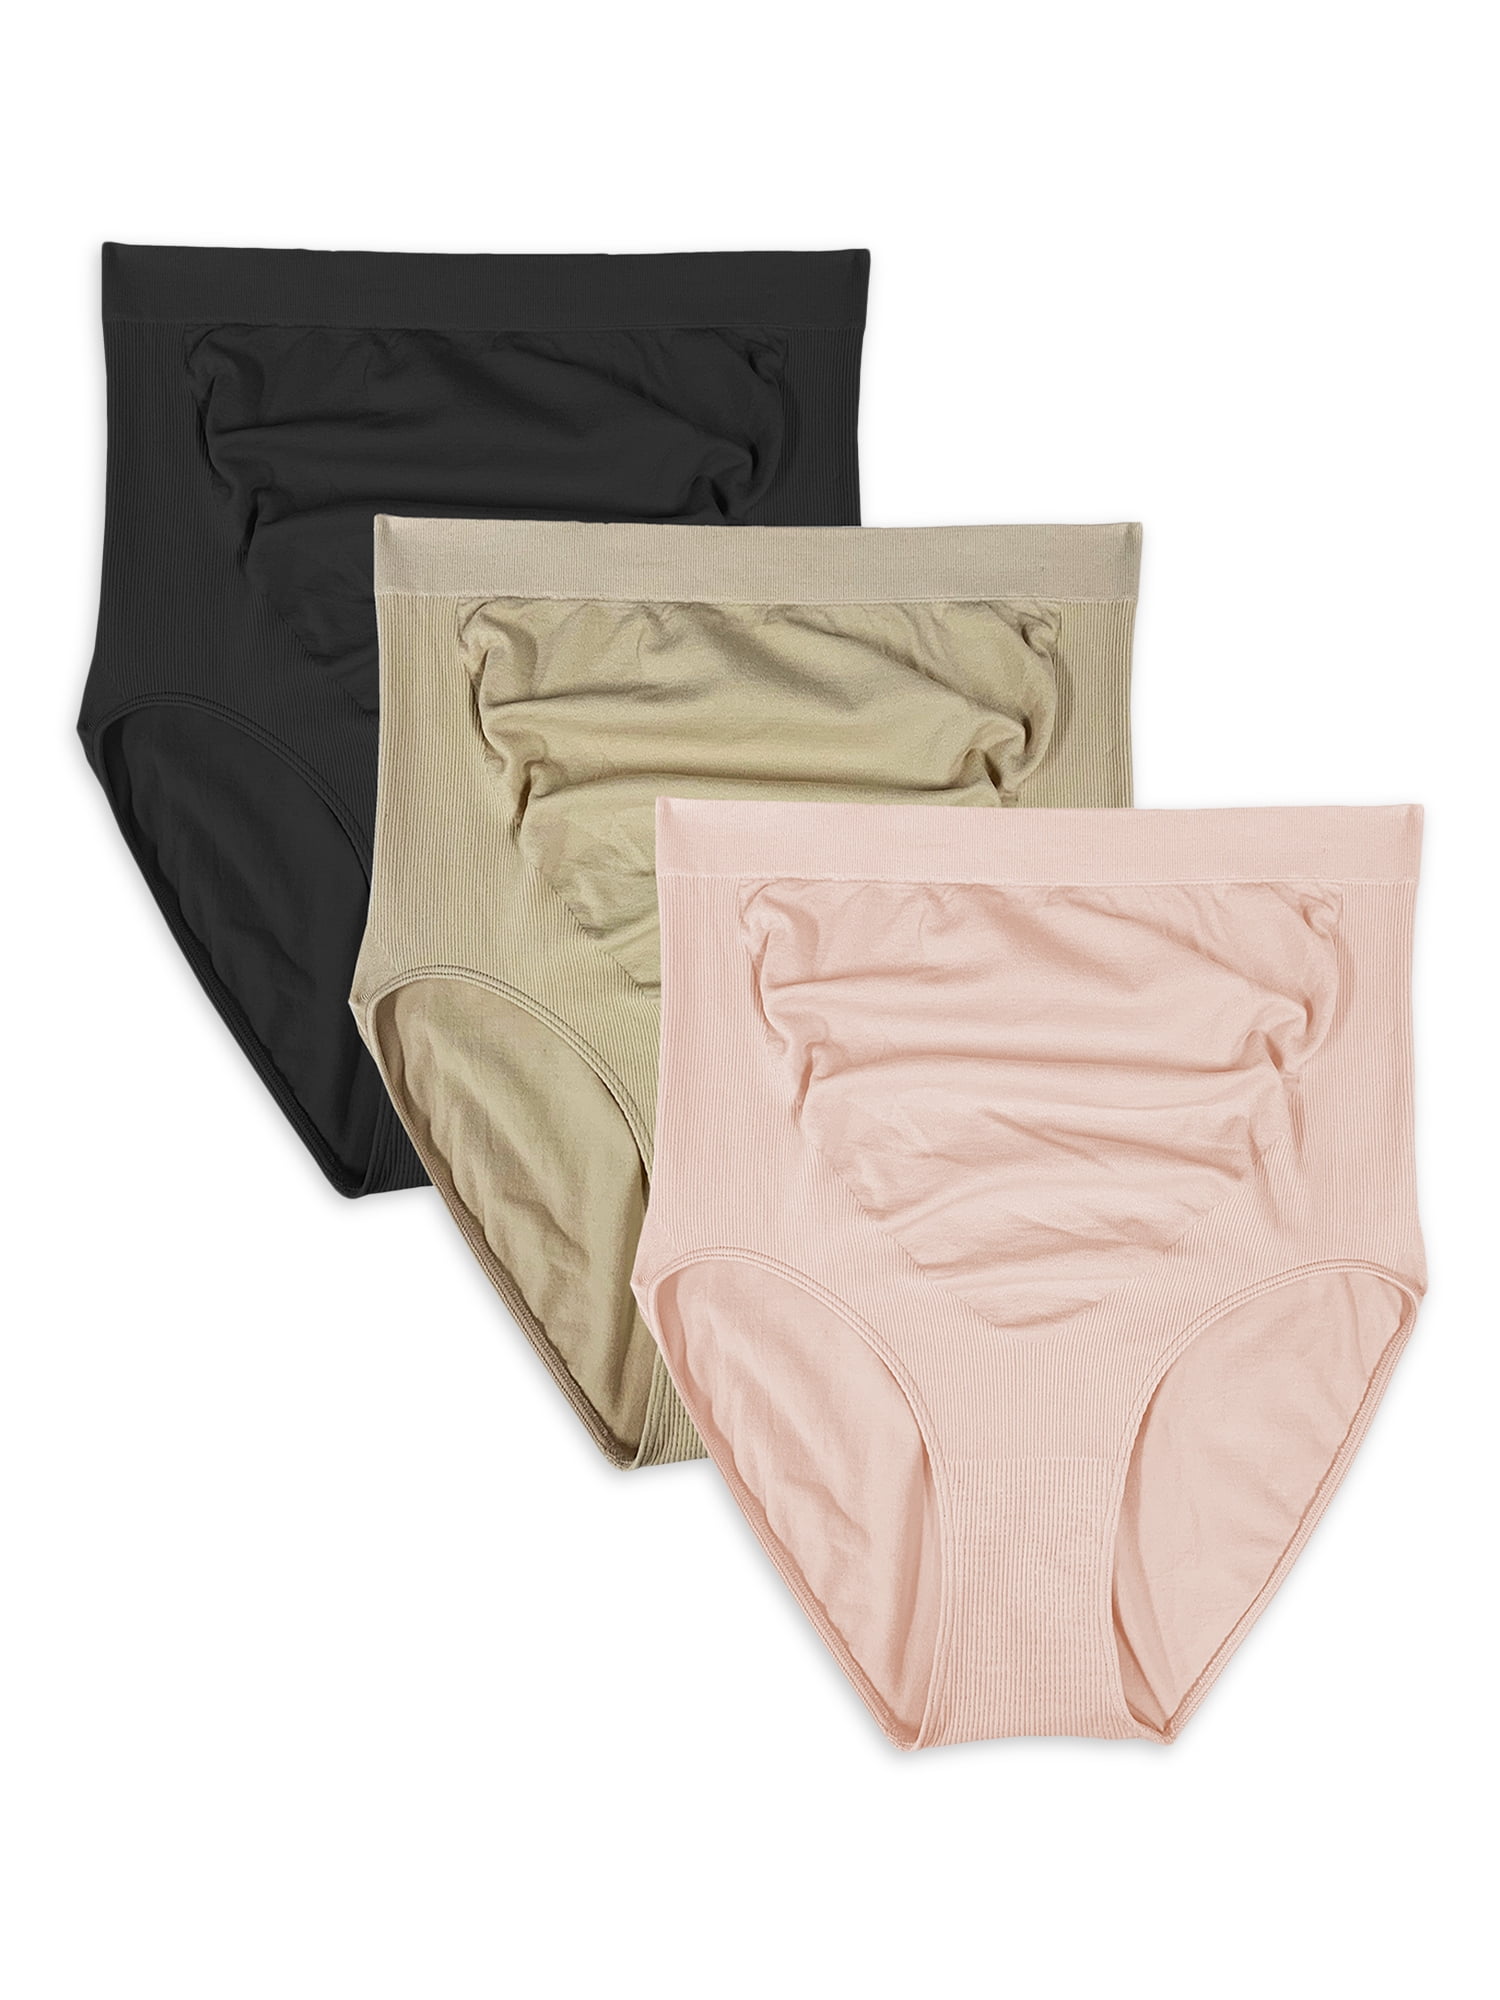 Secret treasures medium maternity panty 3 pack under-belly thong